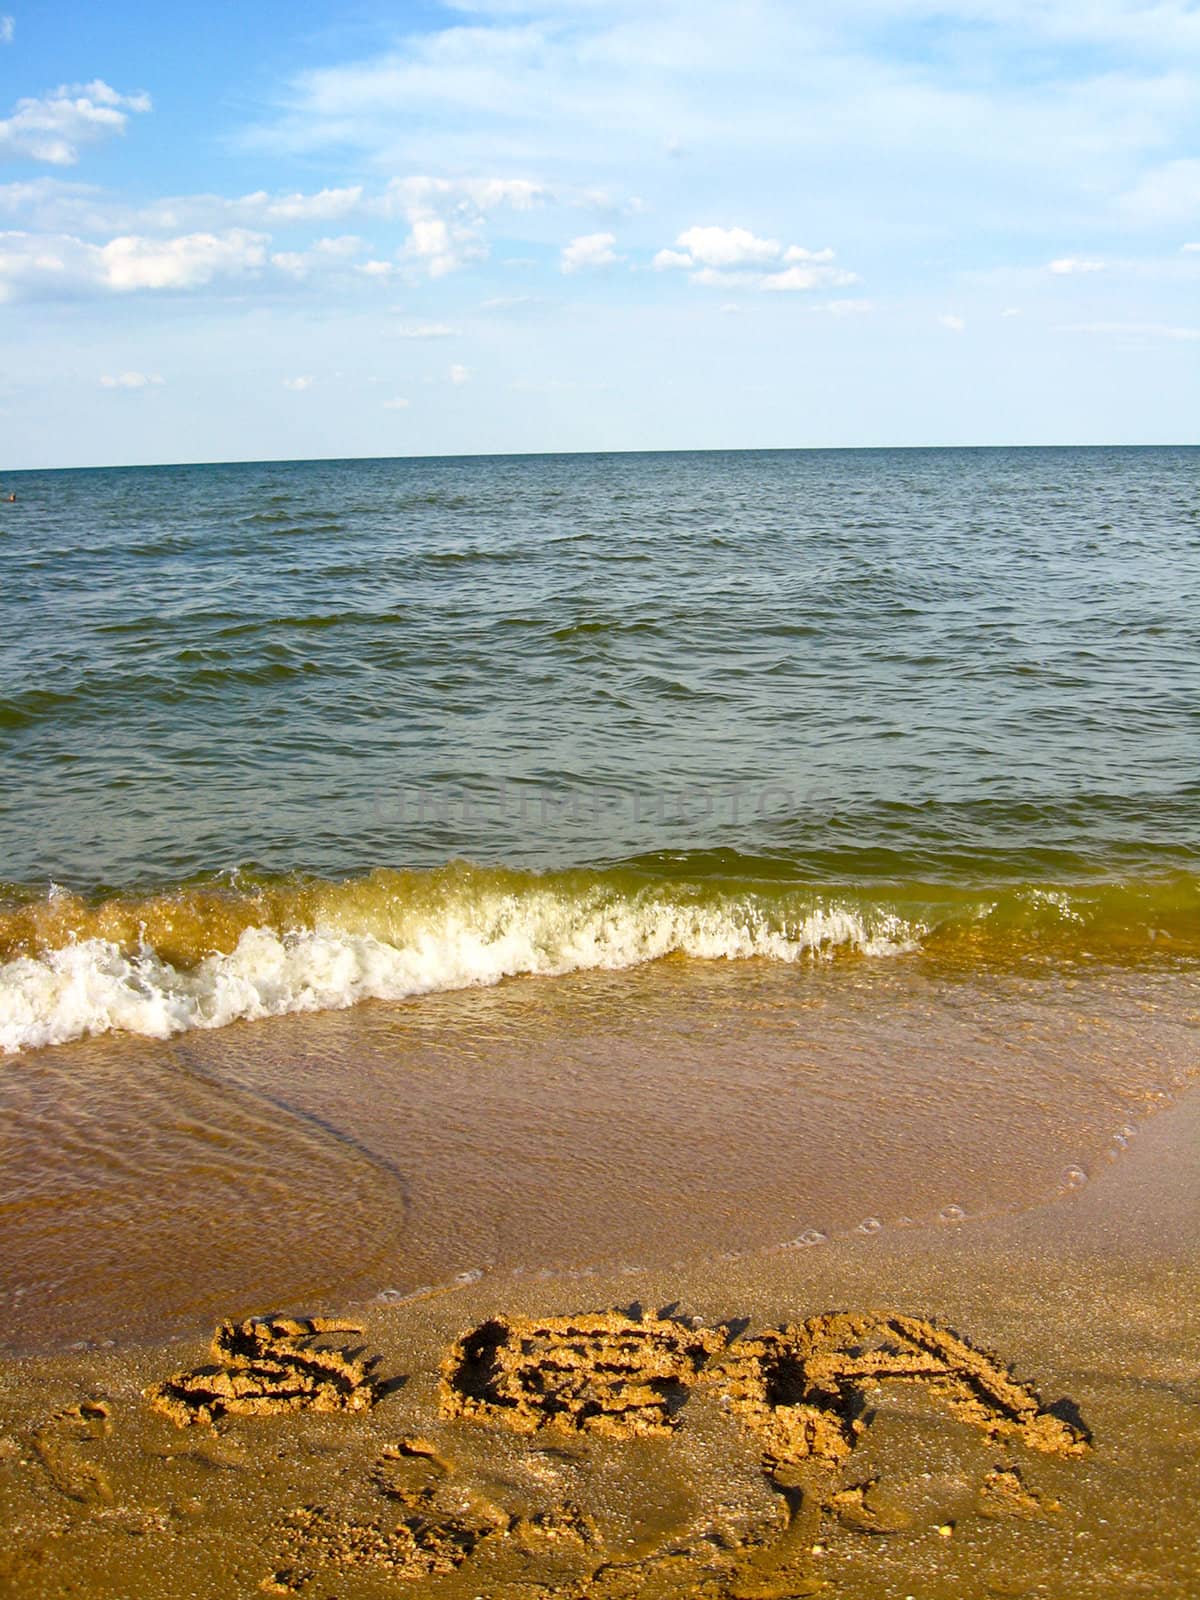 inscription on the sea sand by alexmak